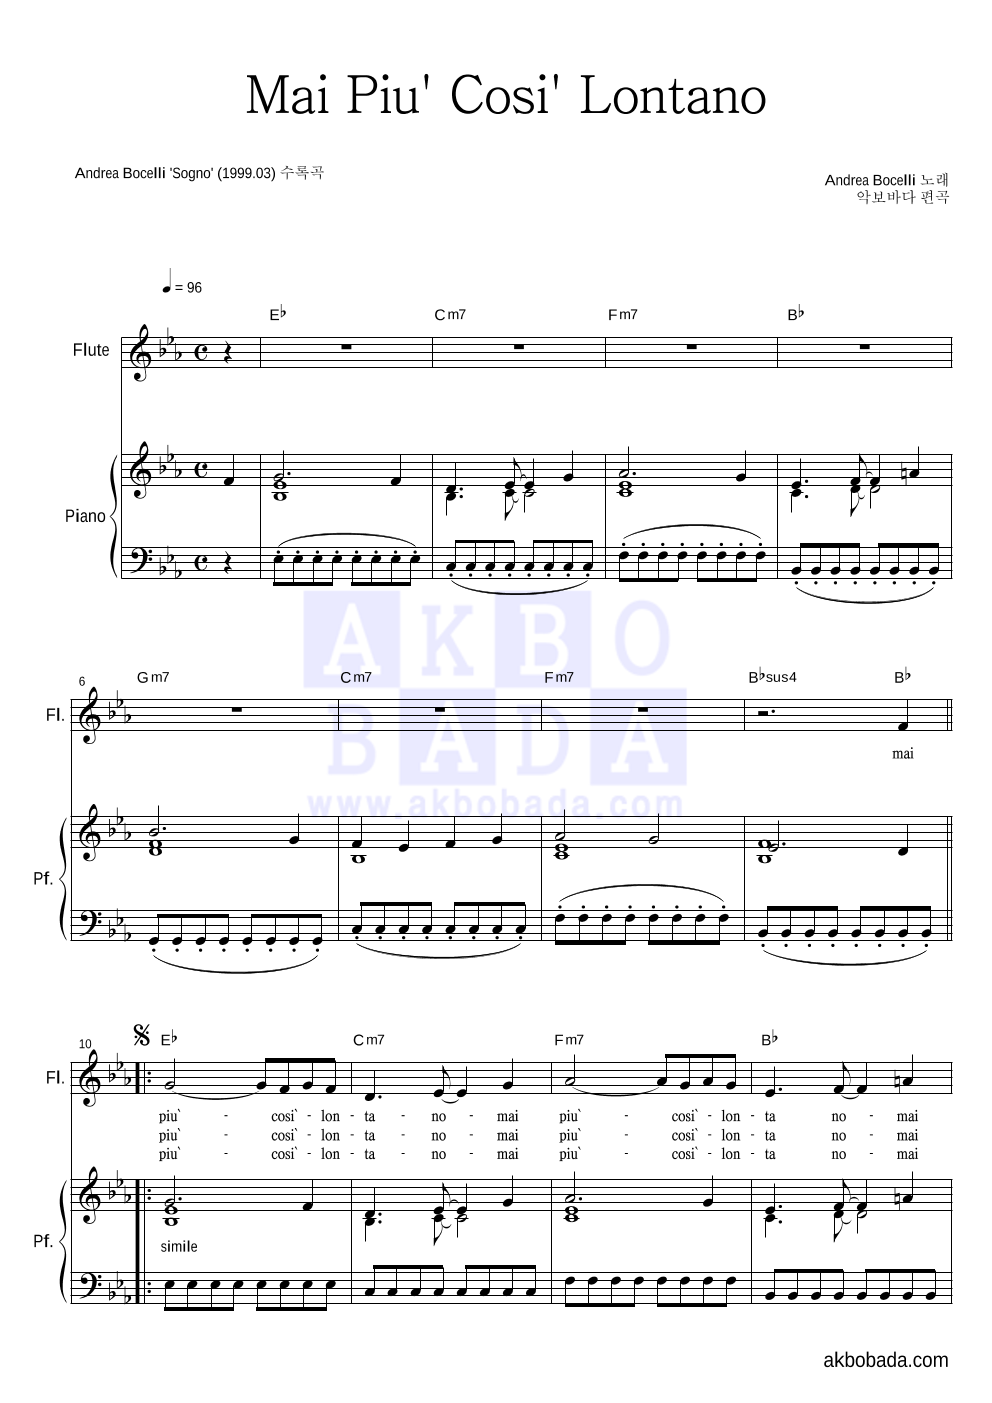 Andrea Bocelli - Mai Piu' Cosi' Lontano 플룻&피아노 악보 